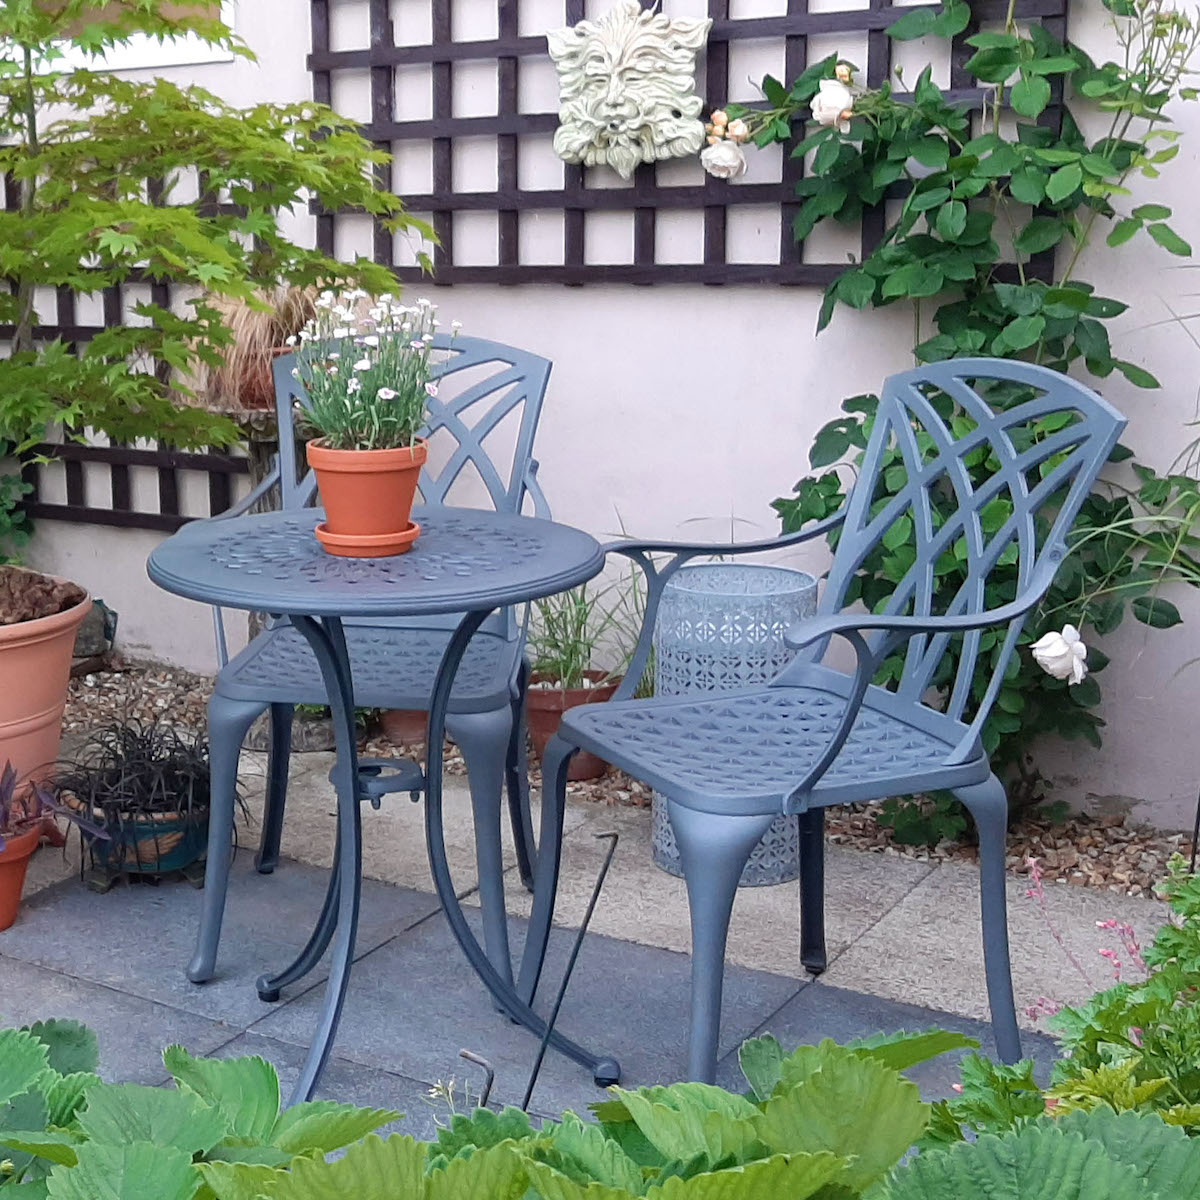 How do you arrange patio furniture in your garden?